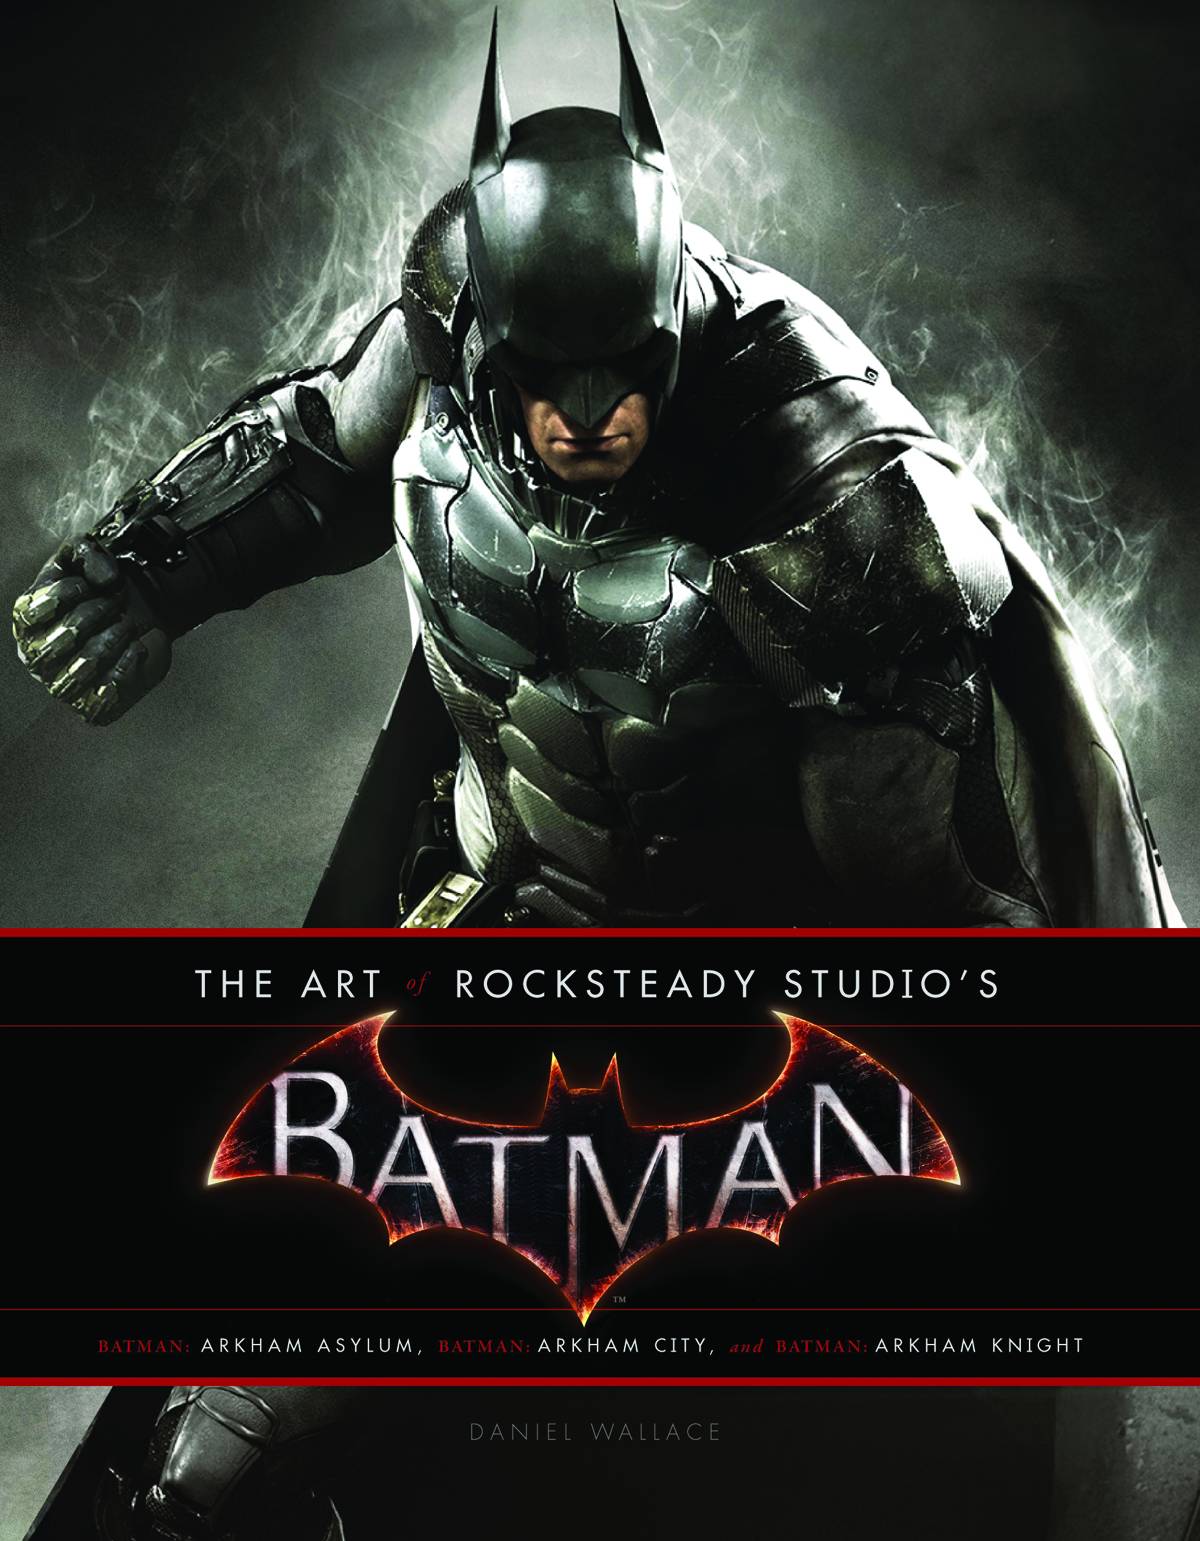 The Art of Rocksteady Studio's Batman